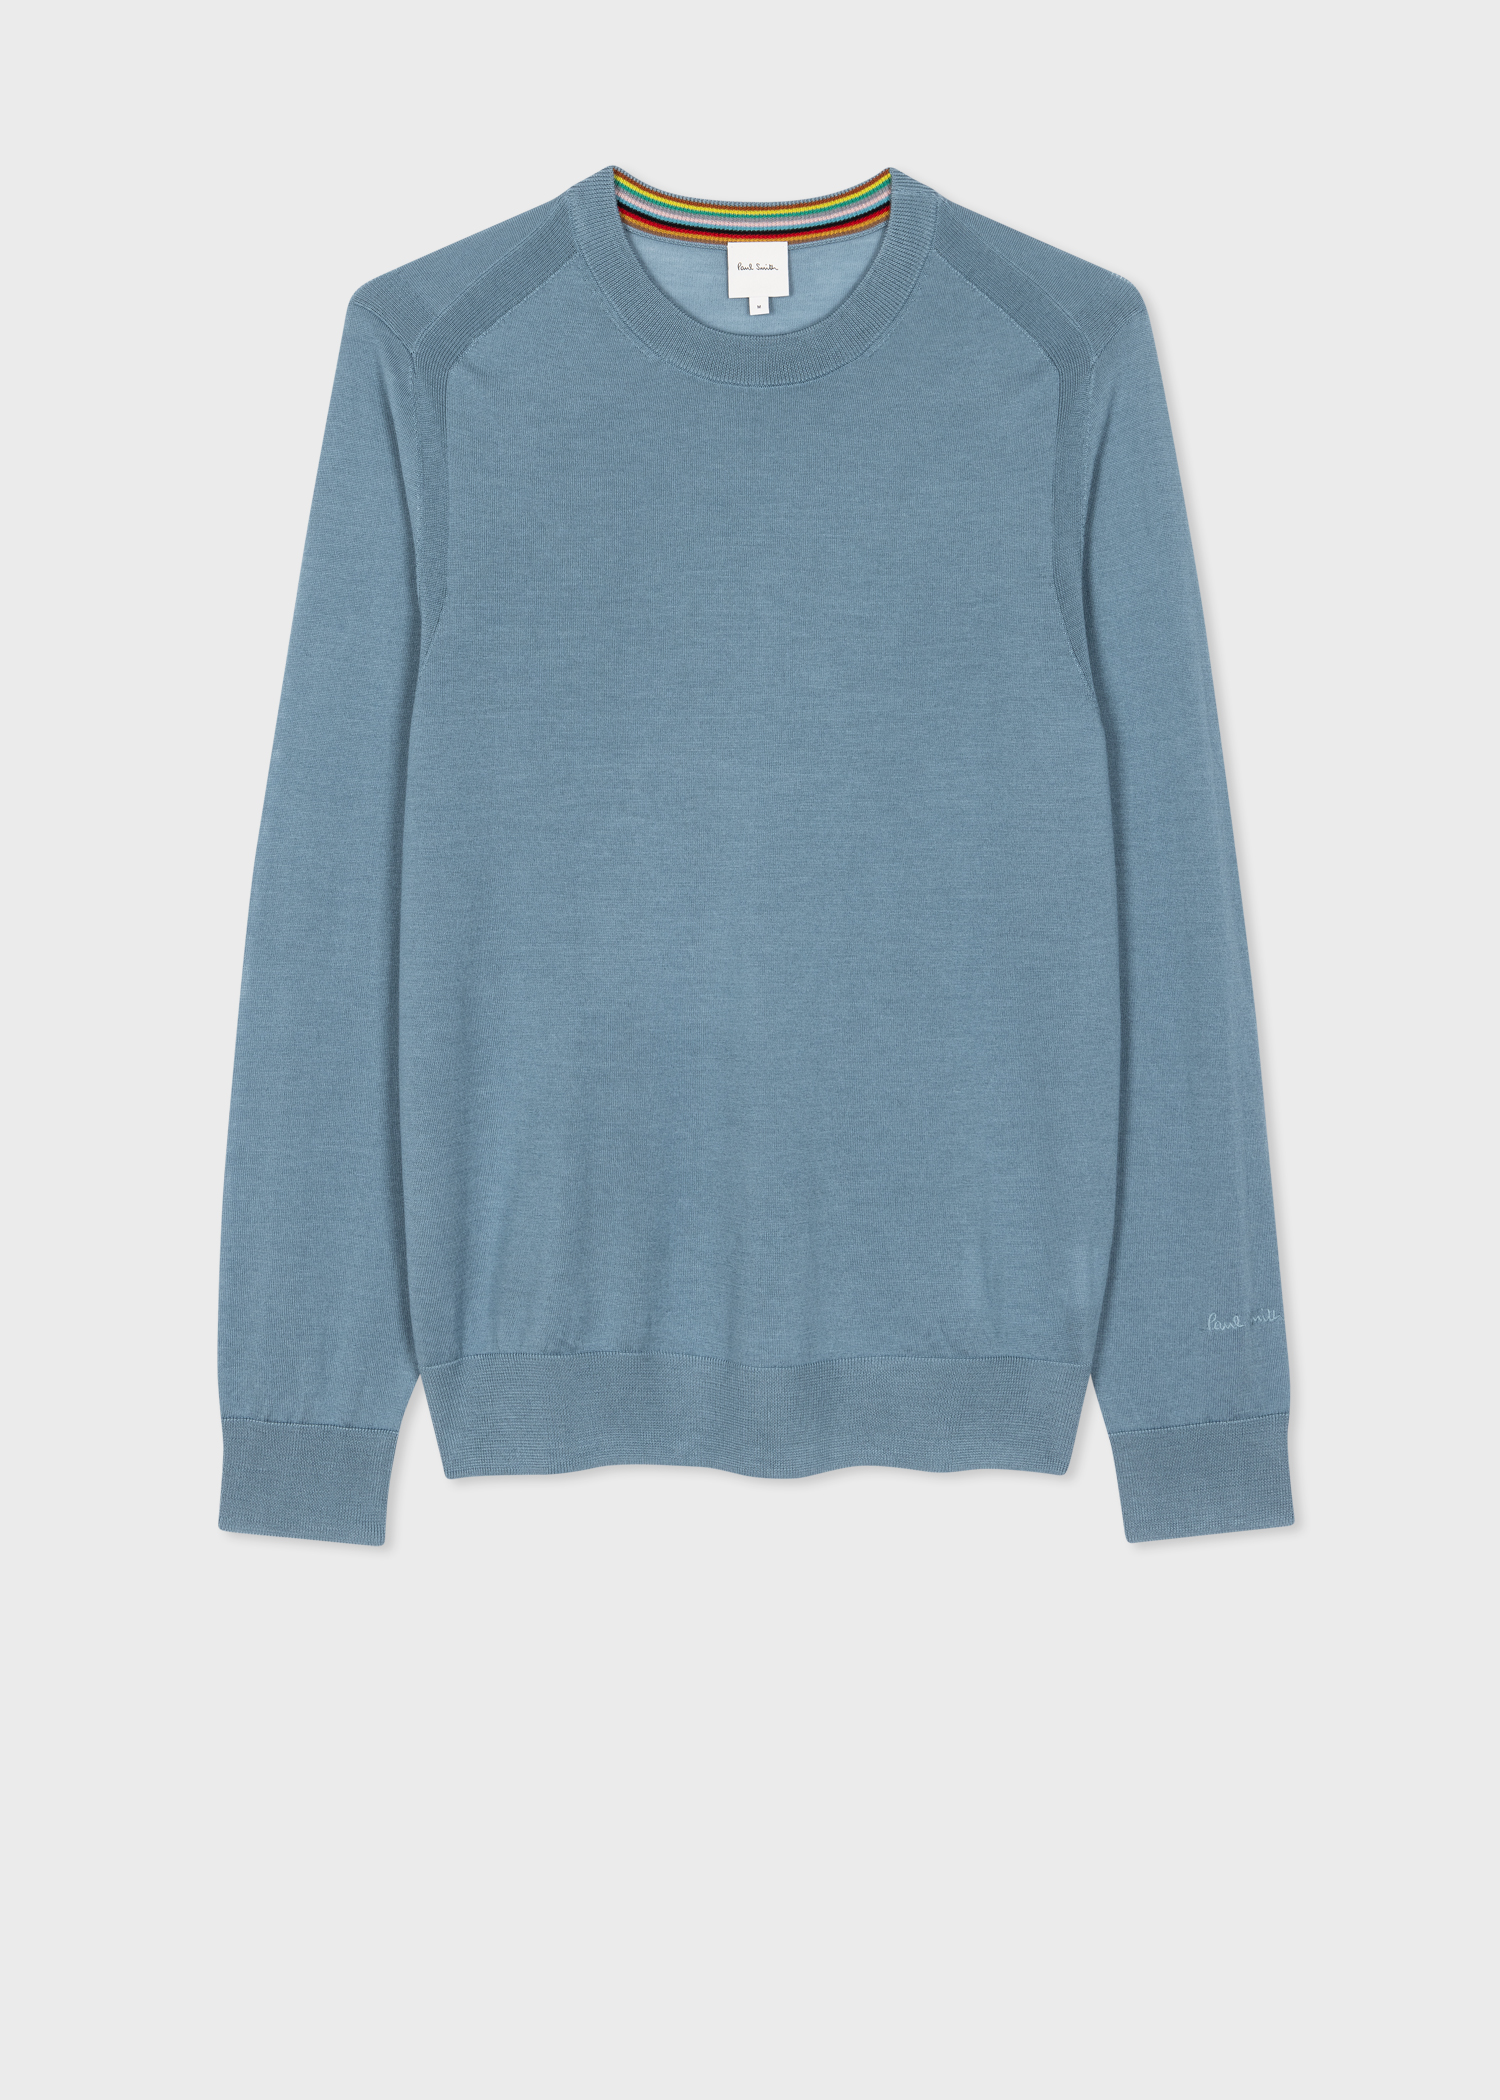 Men's Light Blue Merino Wool Sweater